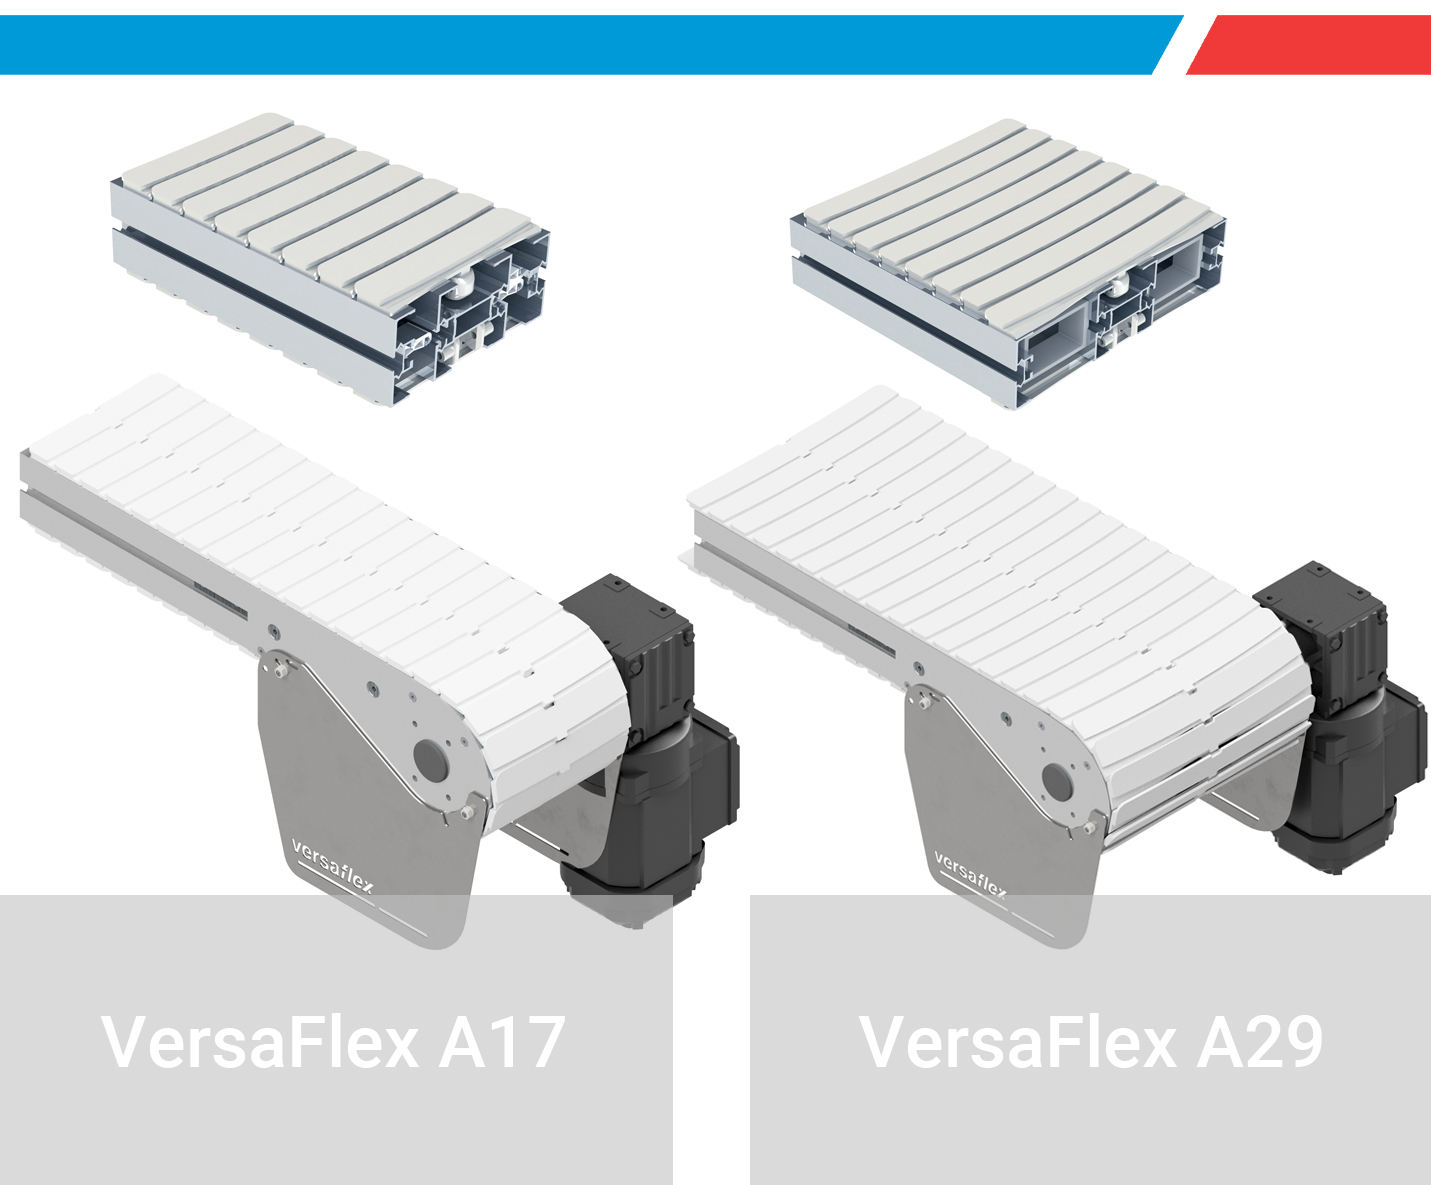 Versaflex A17 and A29